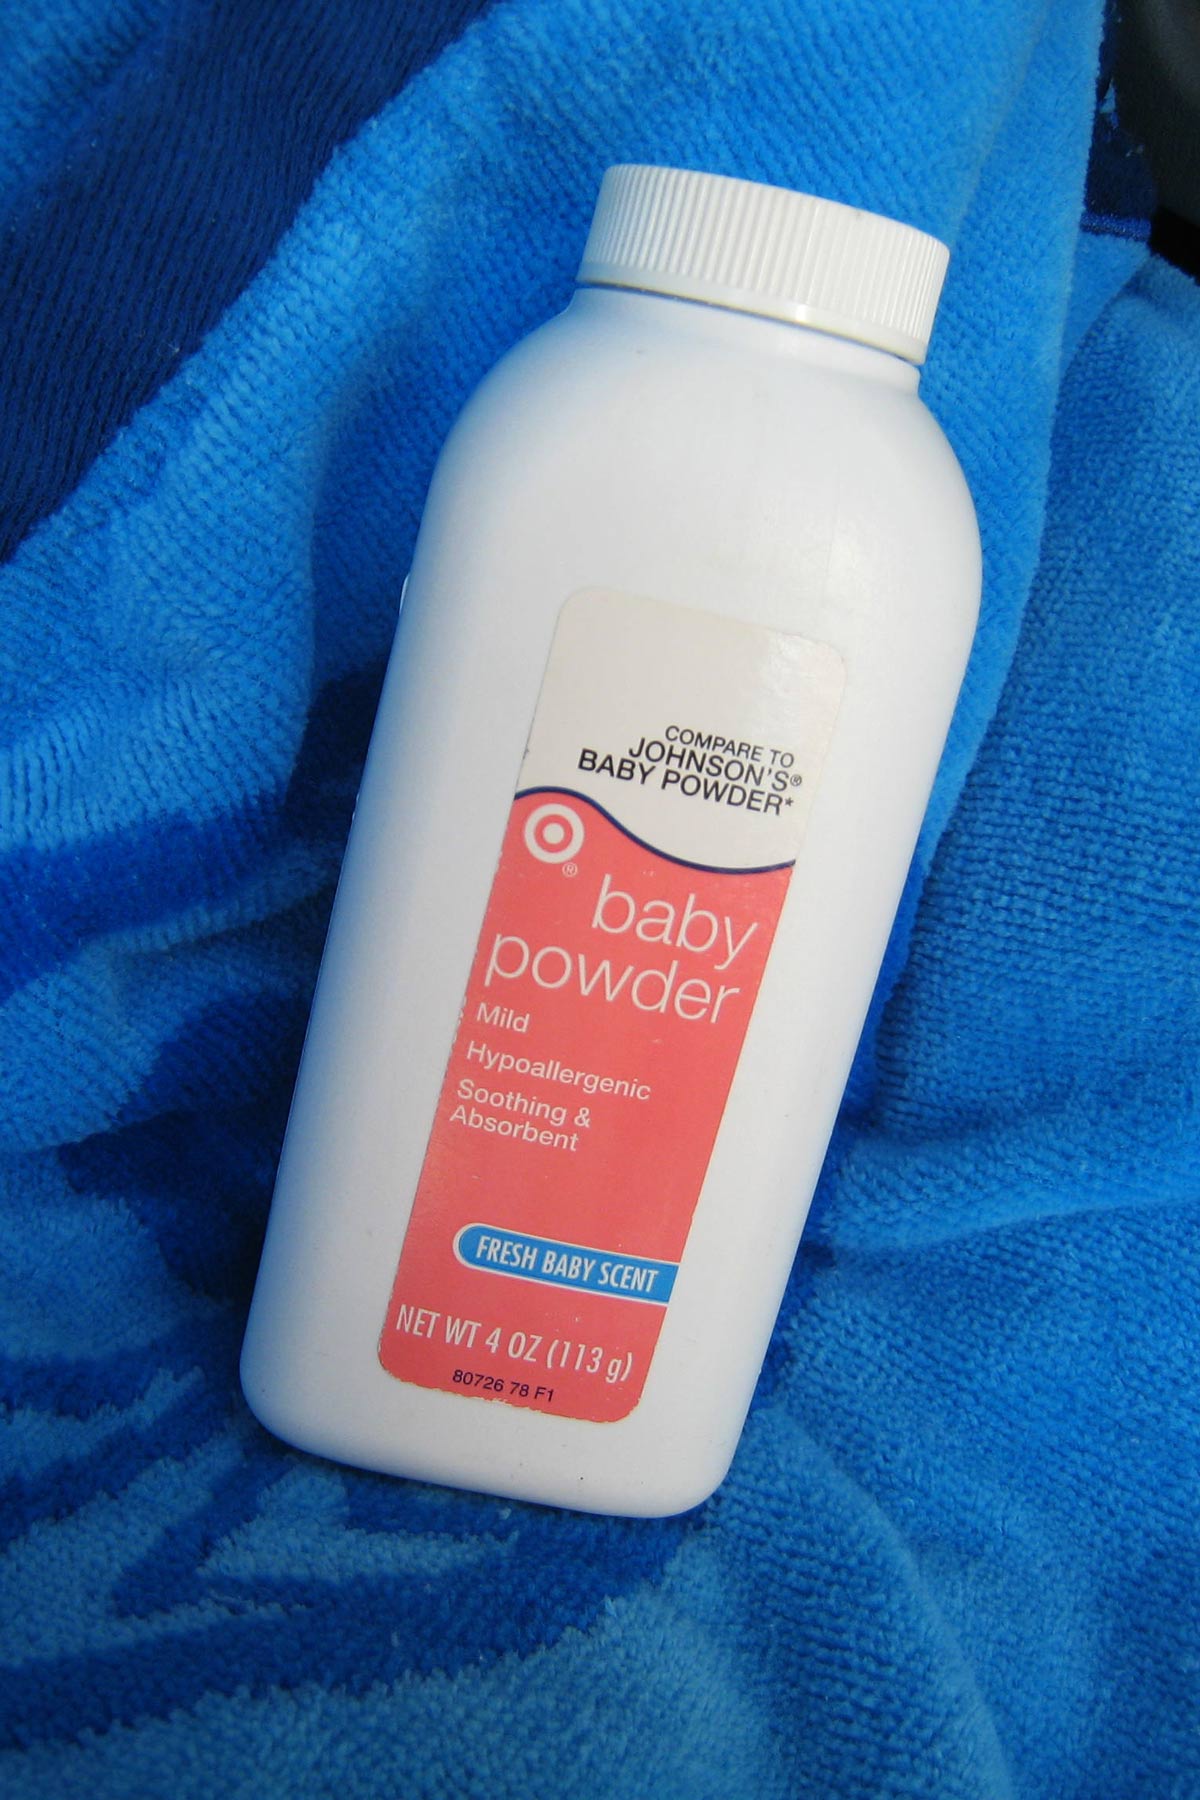 bottle of baby powder on a blue beach towel.